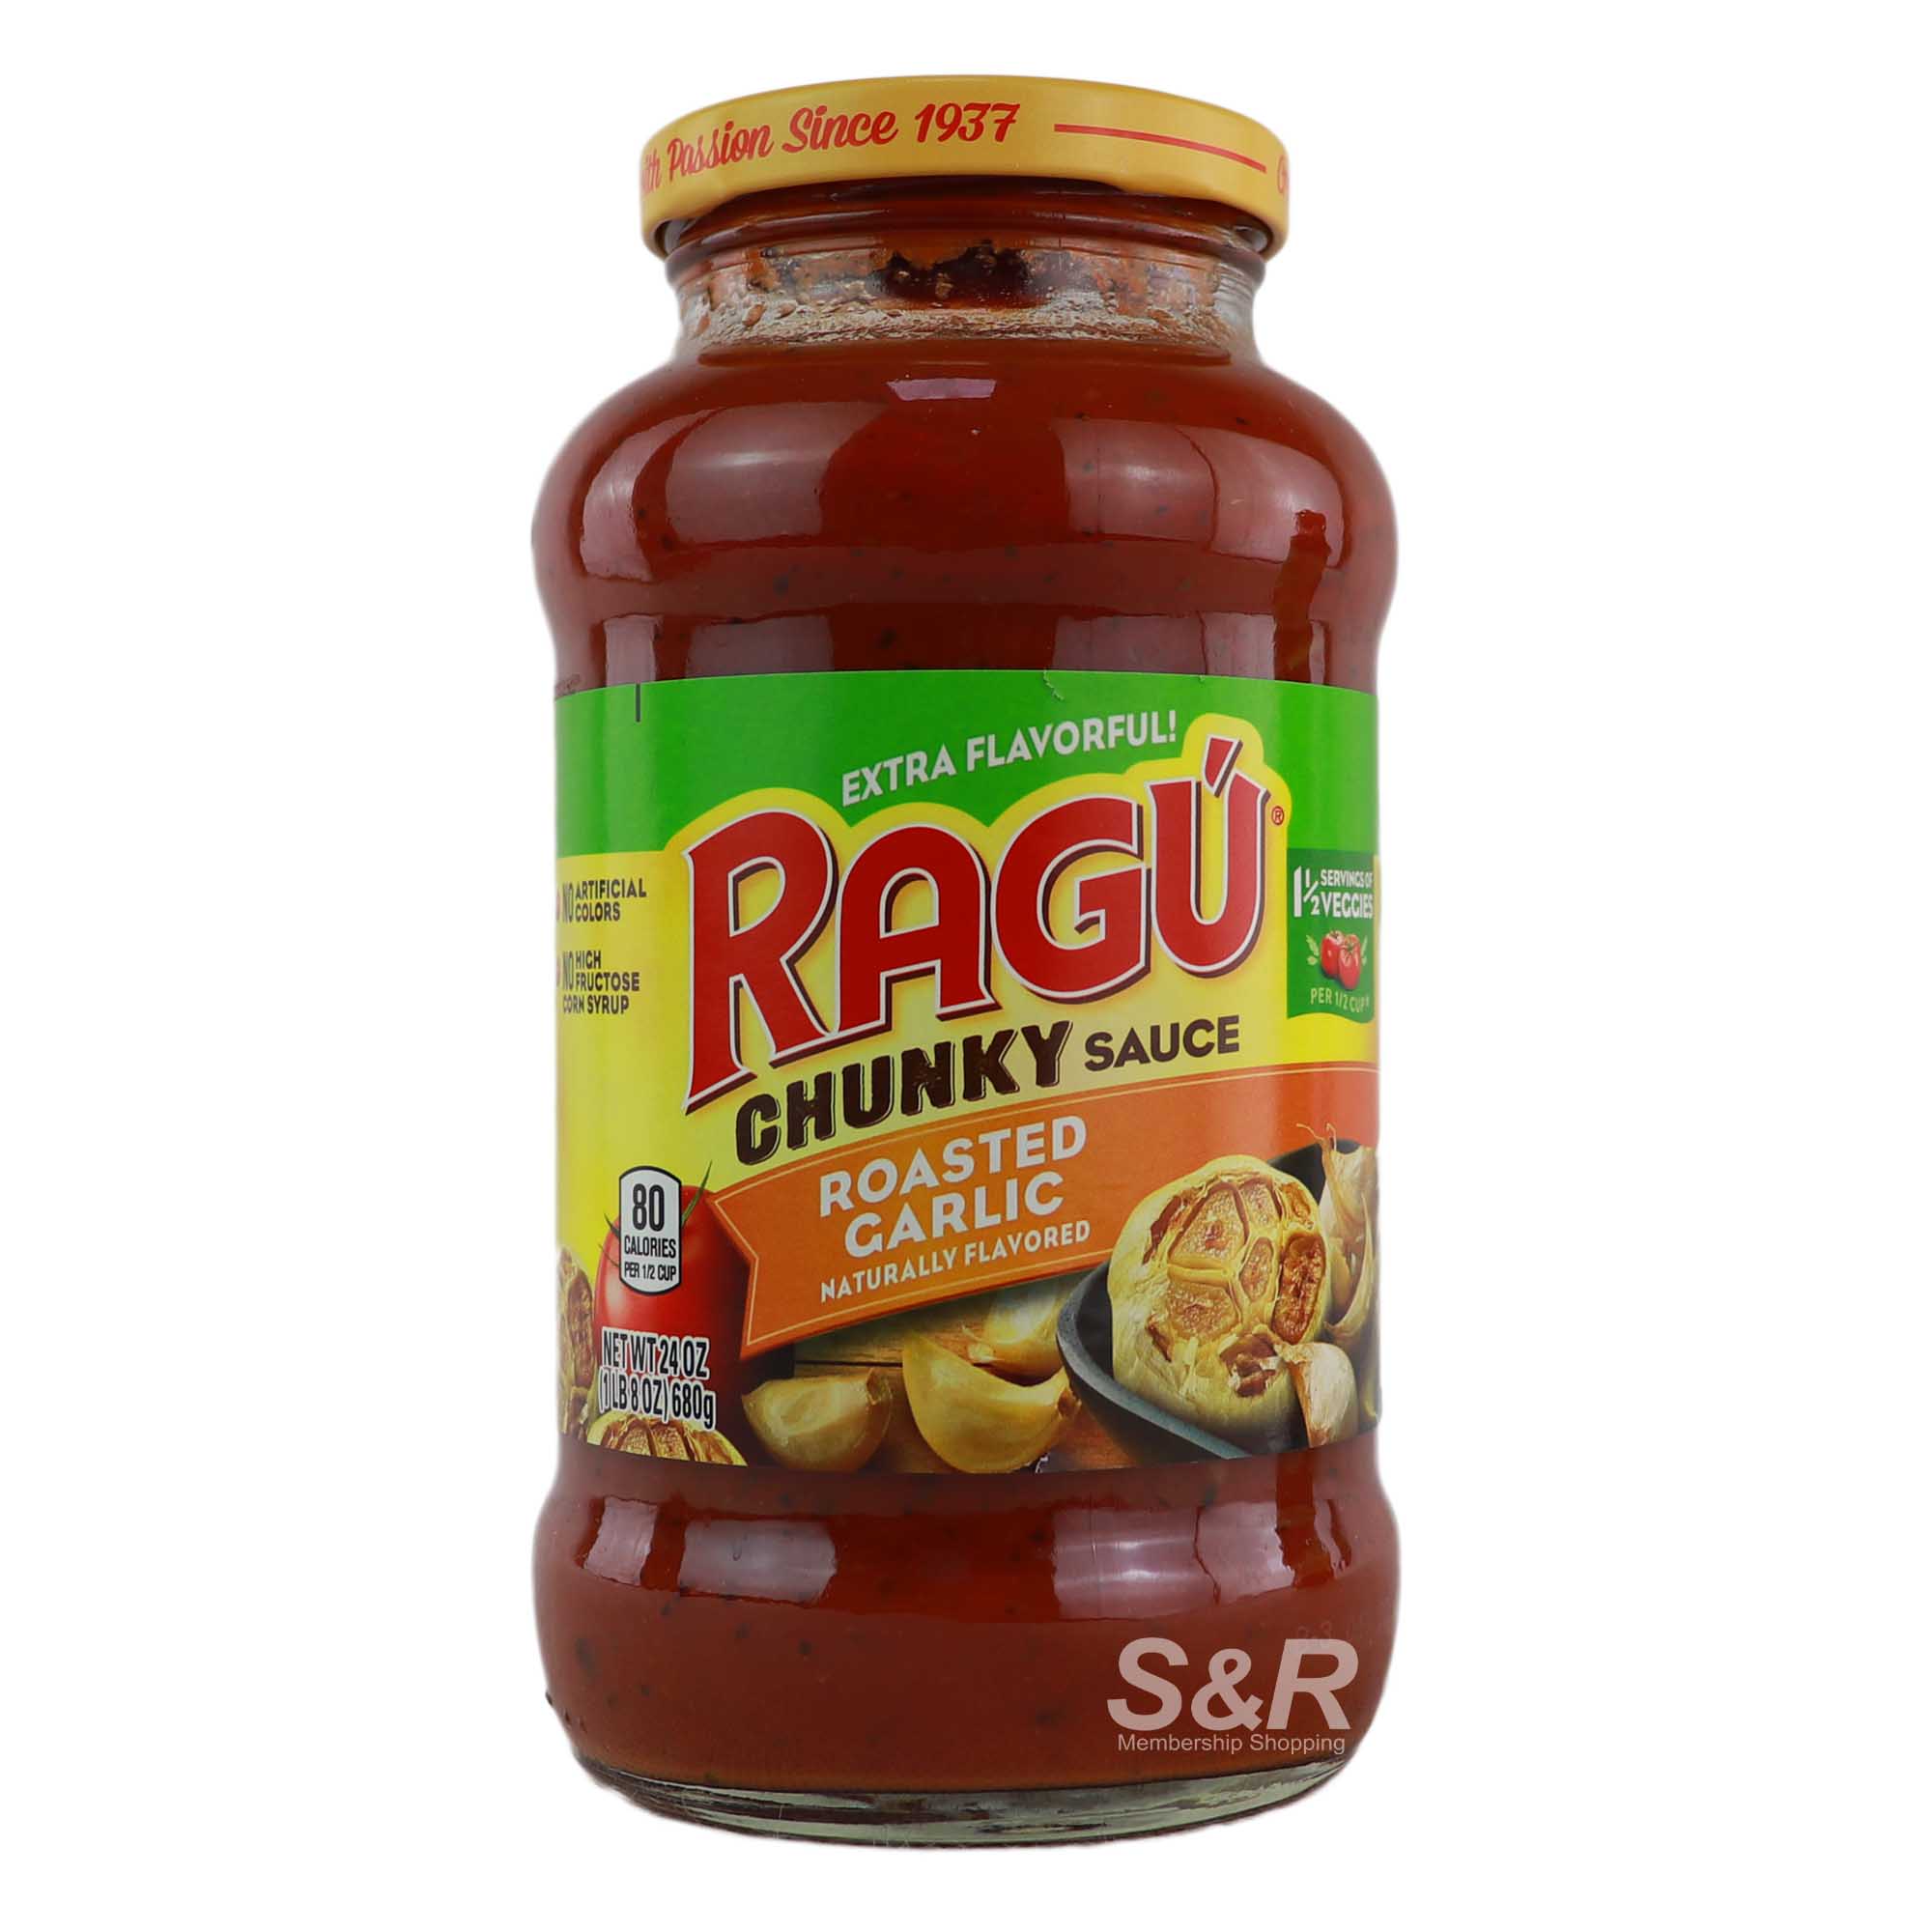 Ragu Chunky Sauce Roasted Garlic 680g